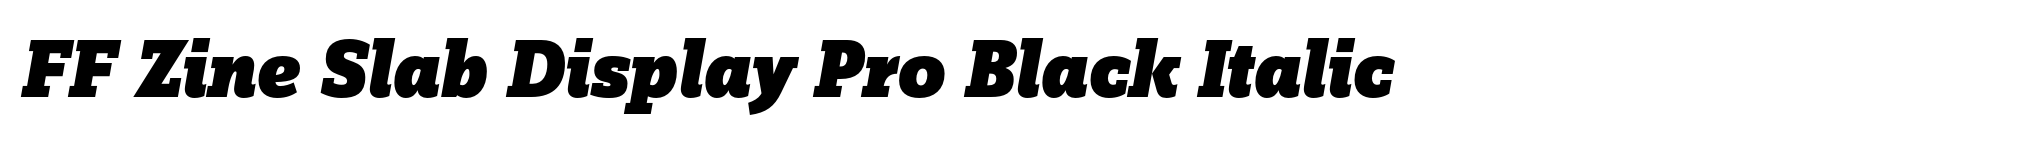 FF Zine Slab Display Pro Black Italic image